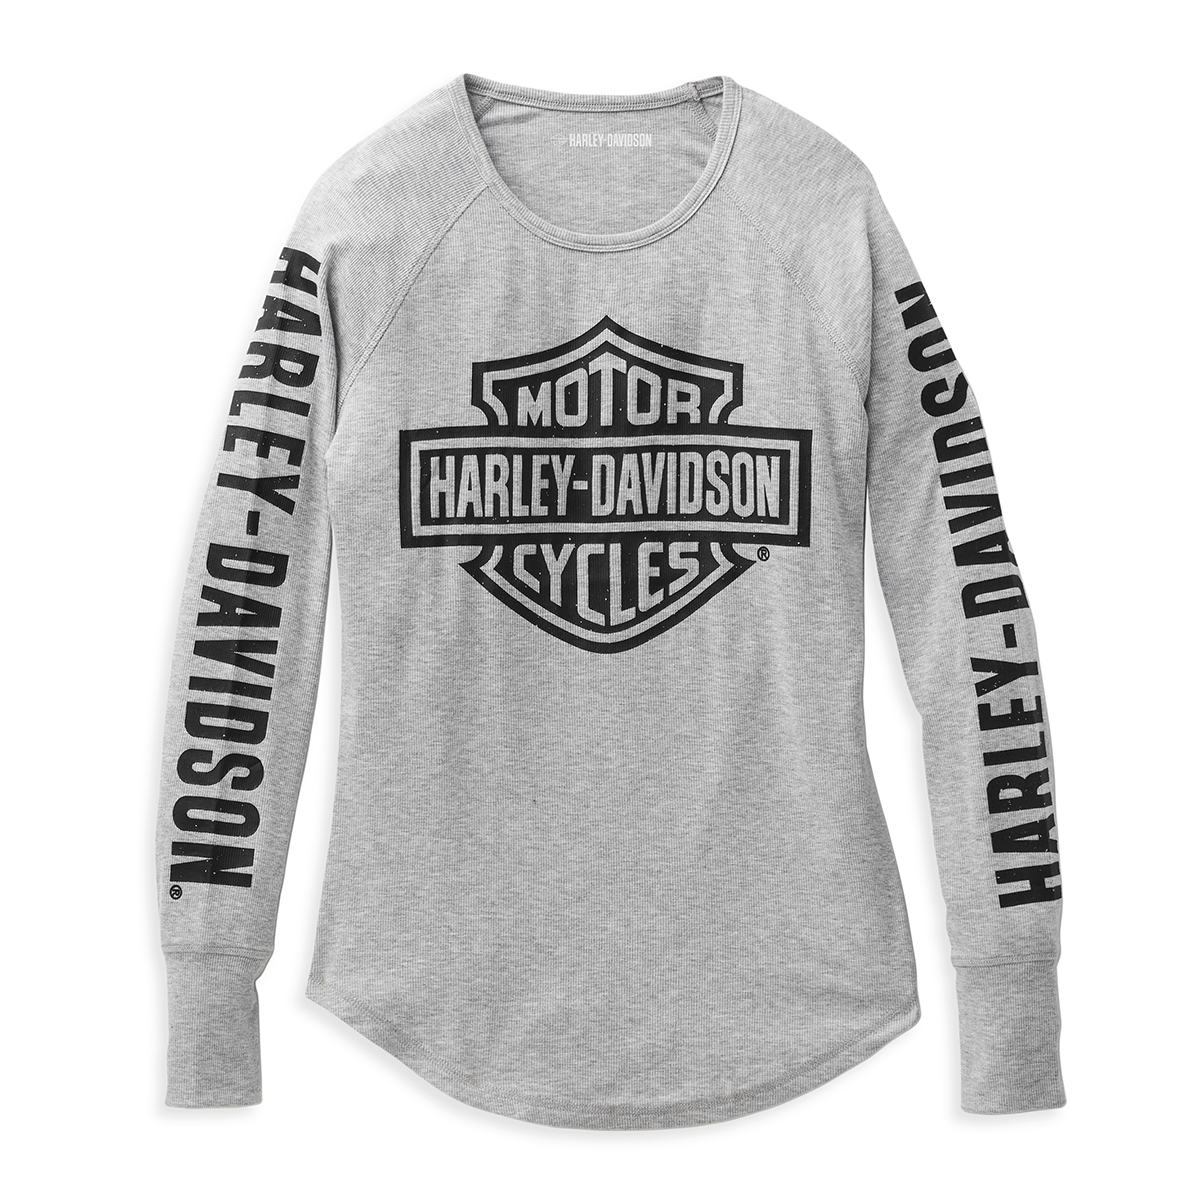 Harley-Davidson Women's Authentic Bar & Shield Rib-Knit Top - Light Grey Heather